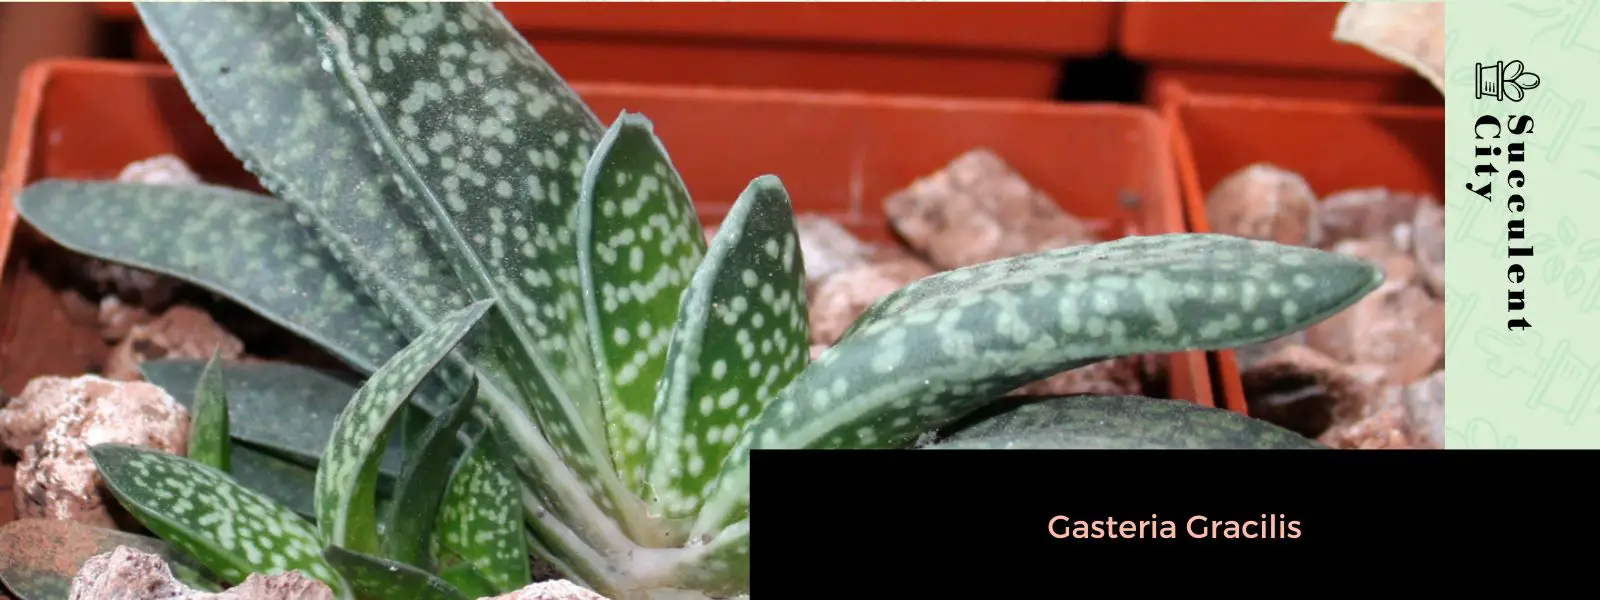 Gasteria gracilis